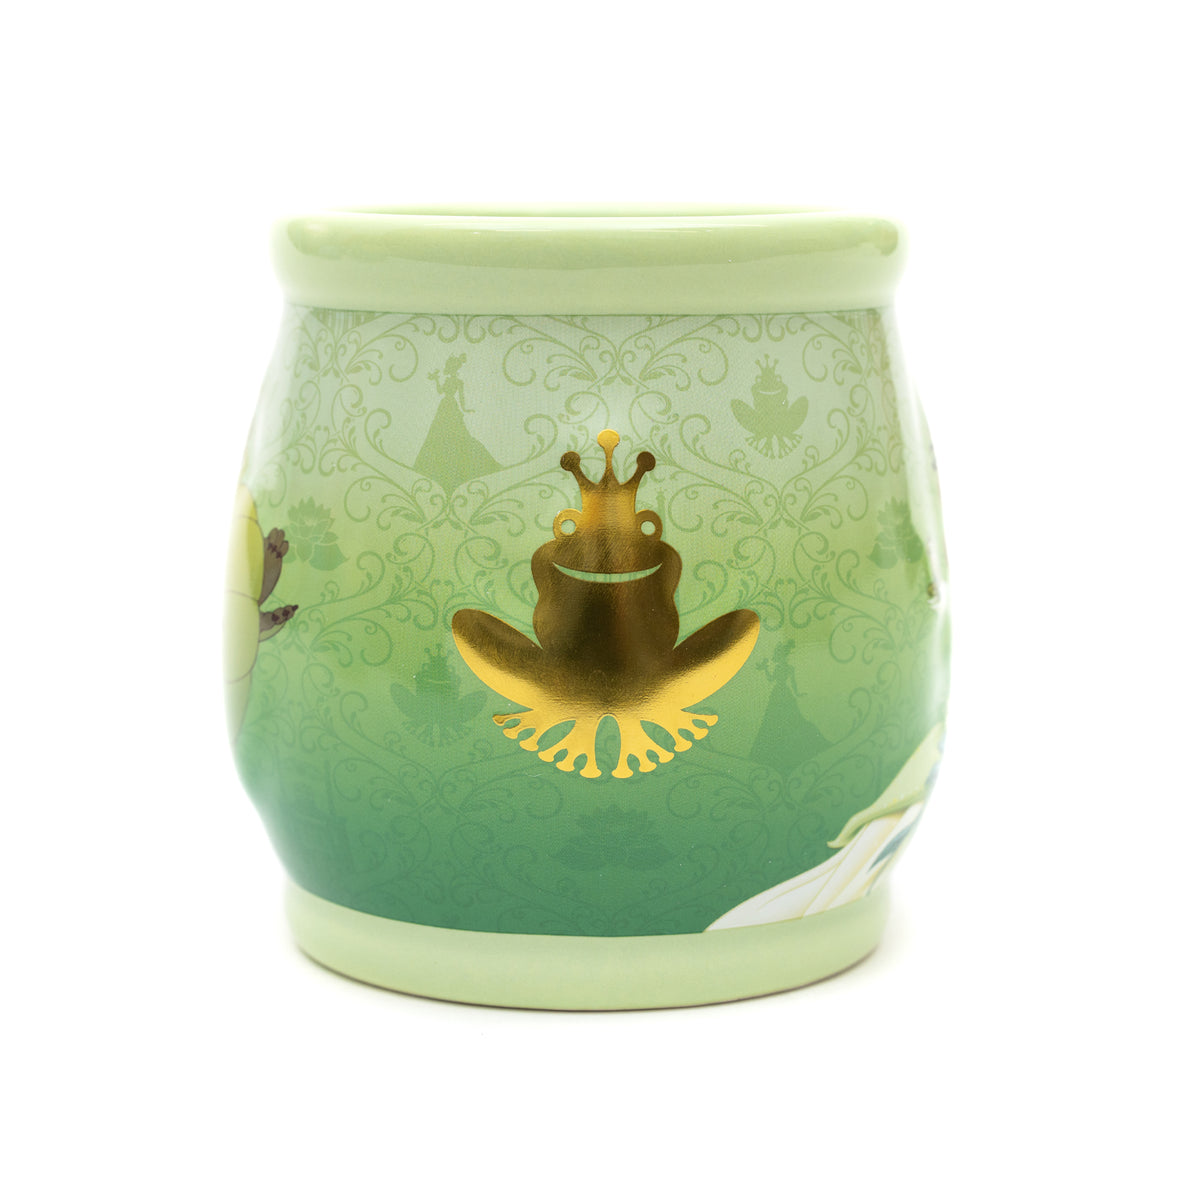 Disney Princess Stories Series Tiana Ceramic Relief Mug 19oz